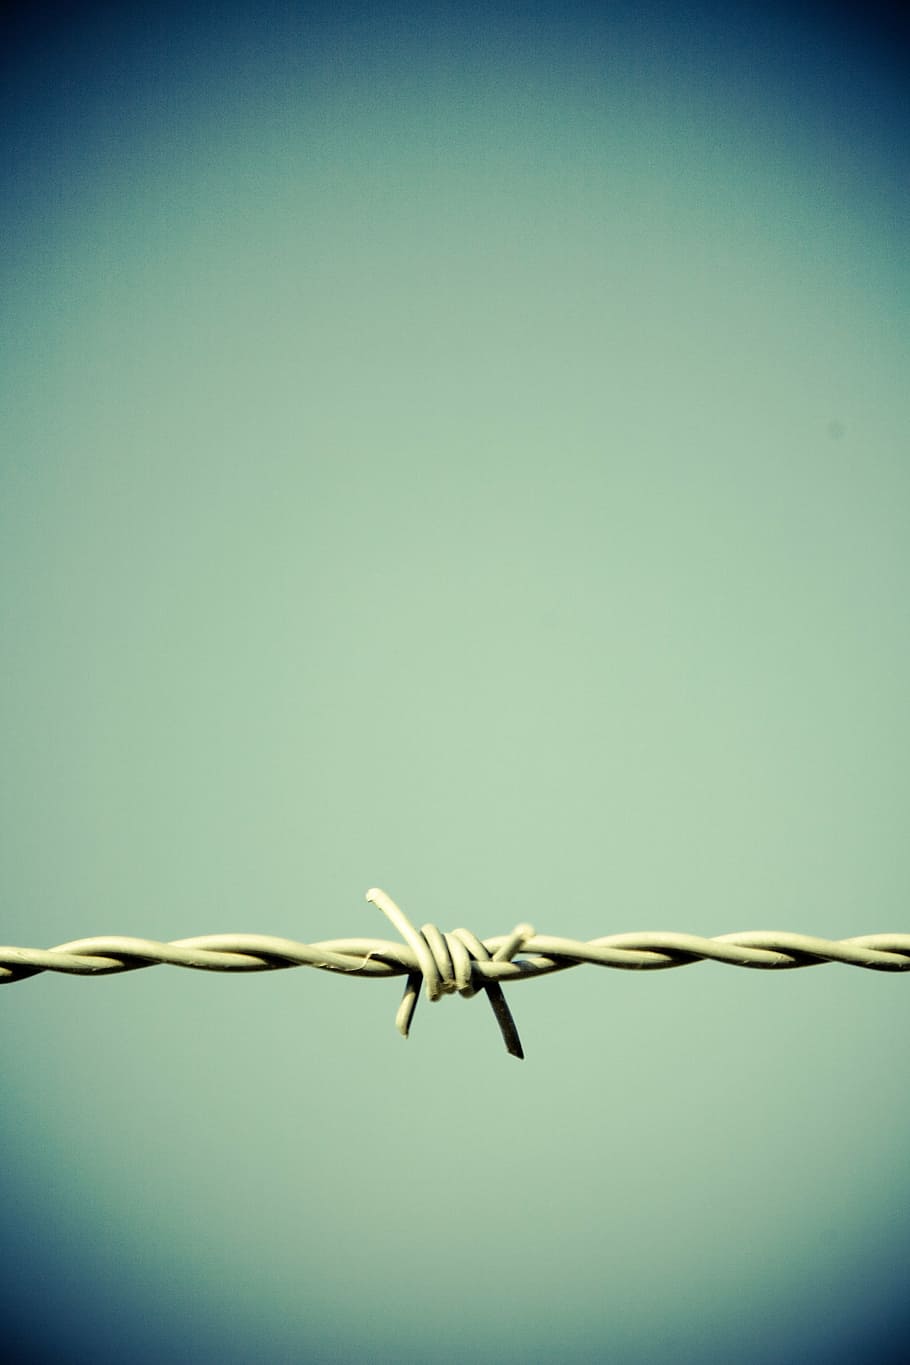 gray barbwire, barbed wire, fence, border, metal, wire, thorn, verrostst, risk, imprisoned